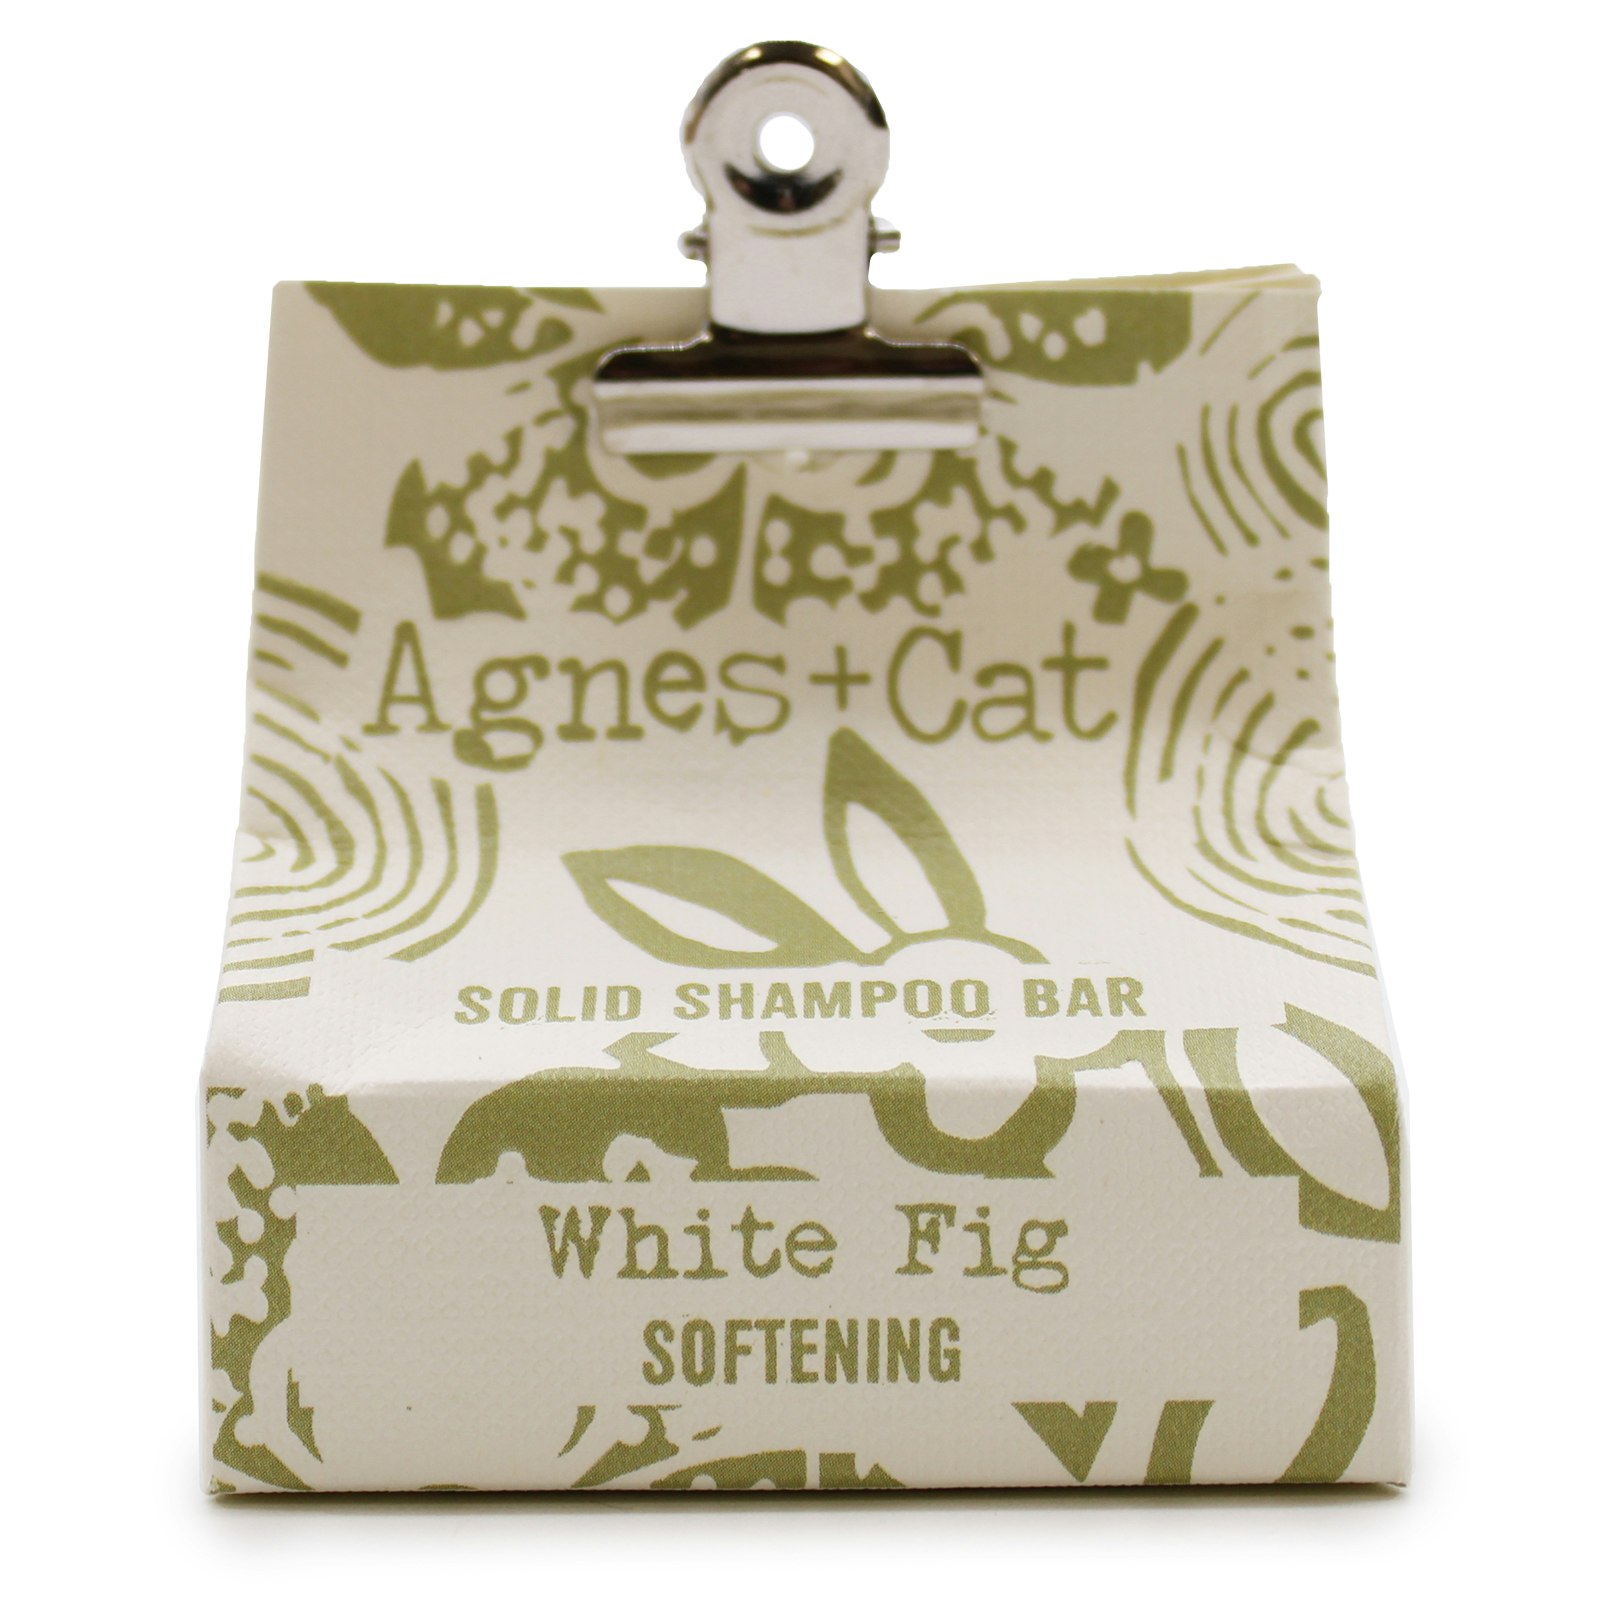 Shampoo bar - White fig - Softening